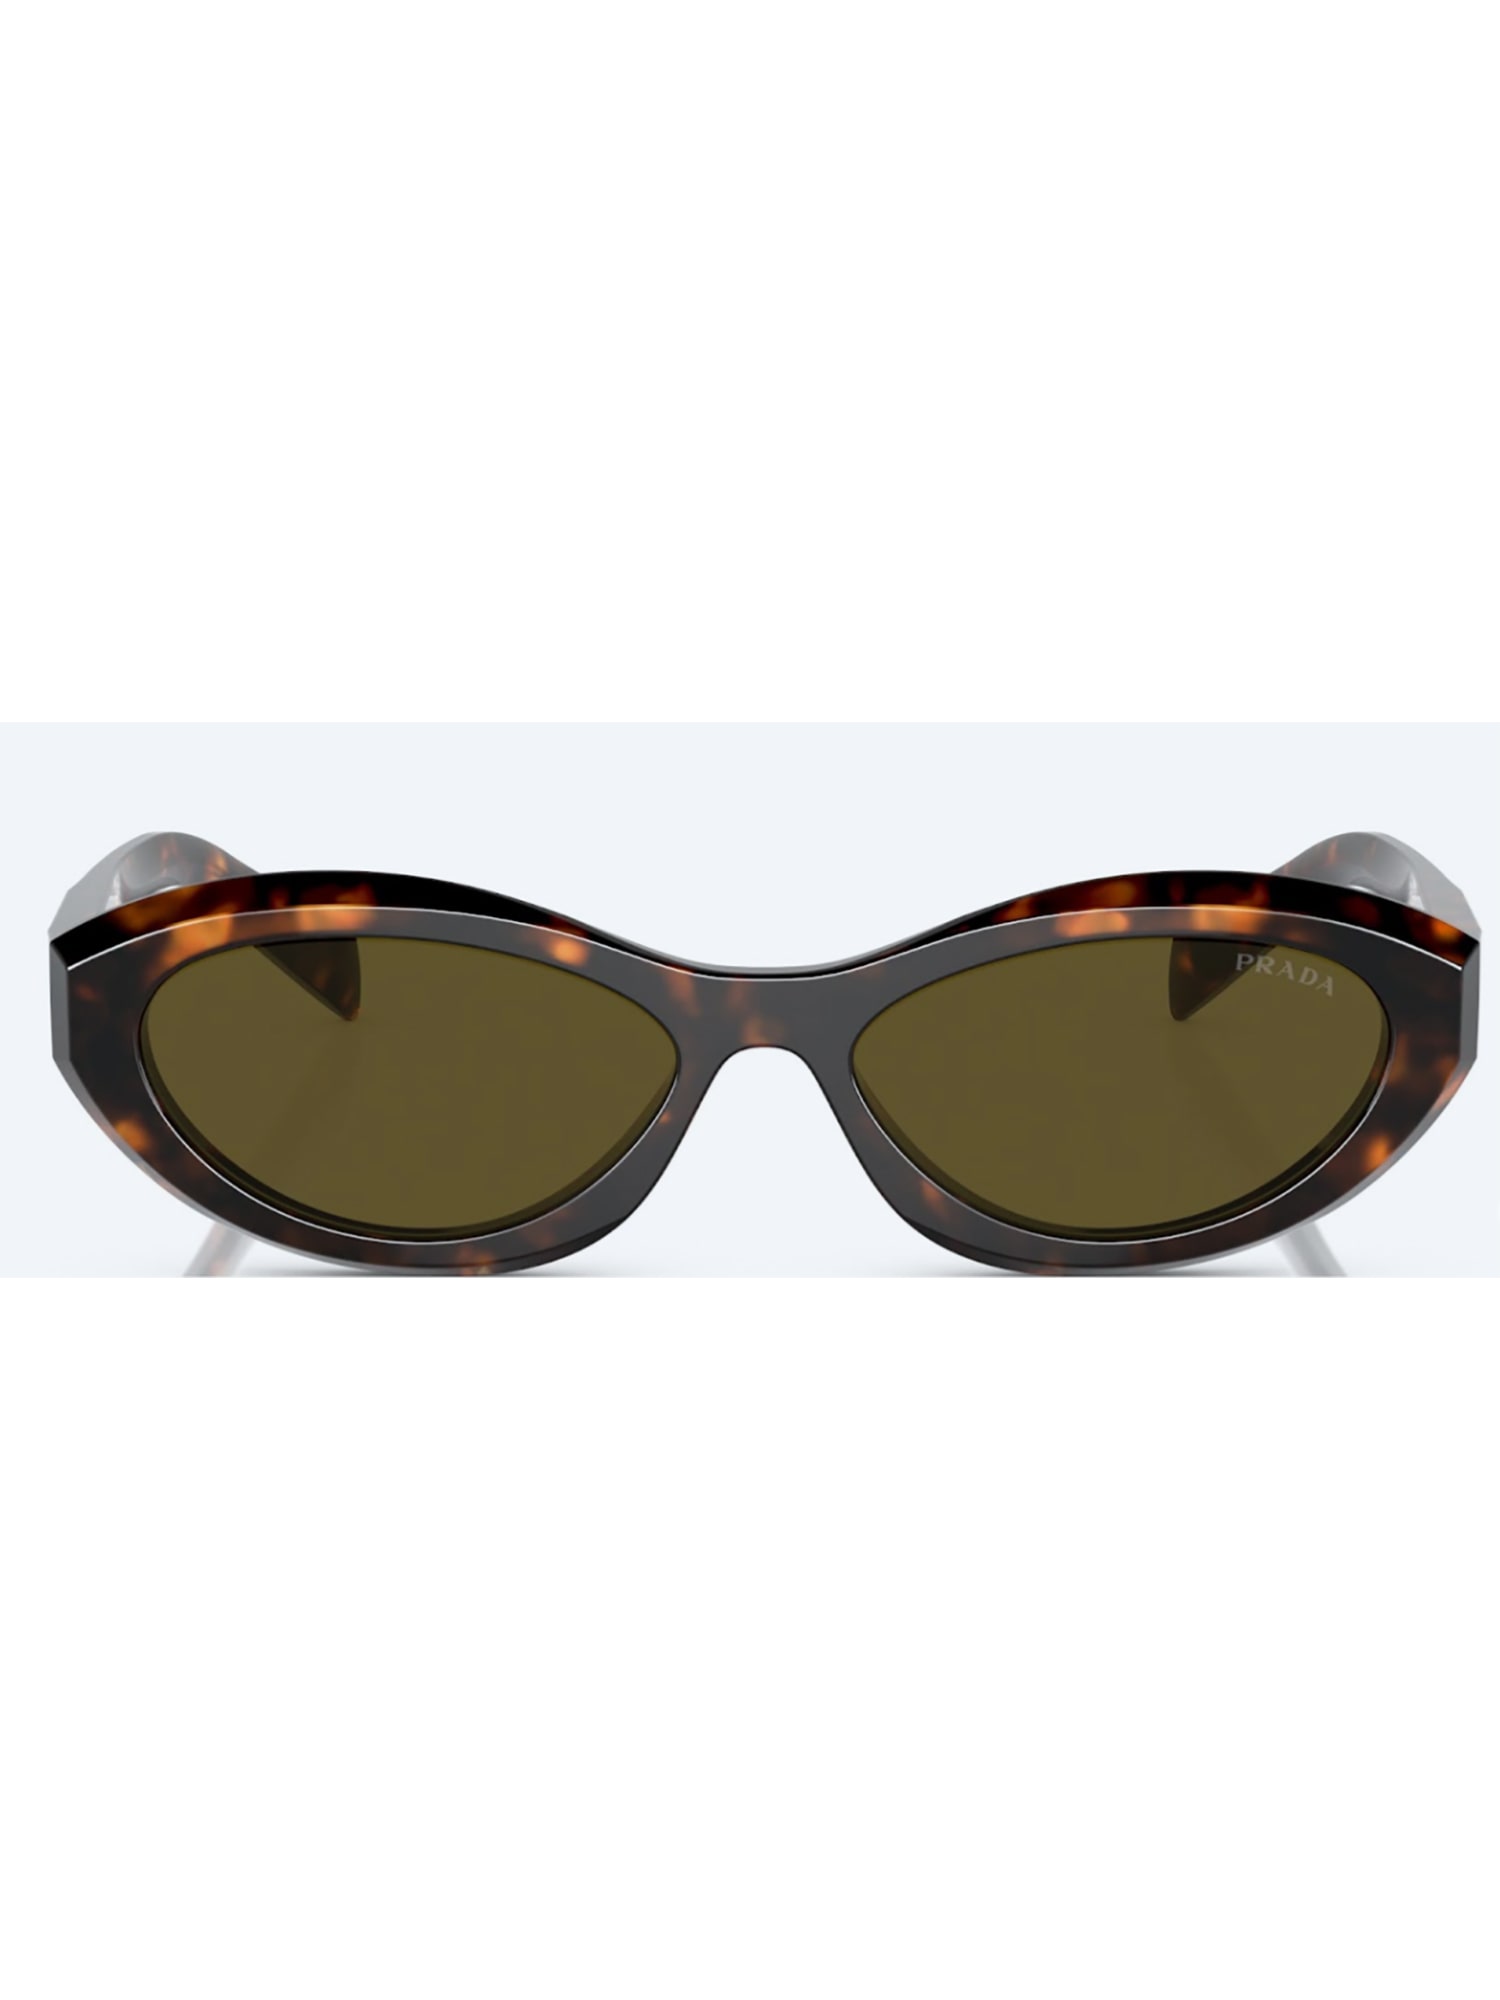 Shop Prada 26zs Sole Sunglasses